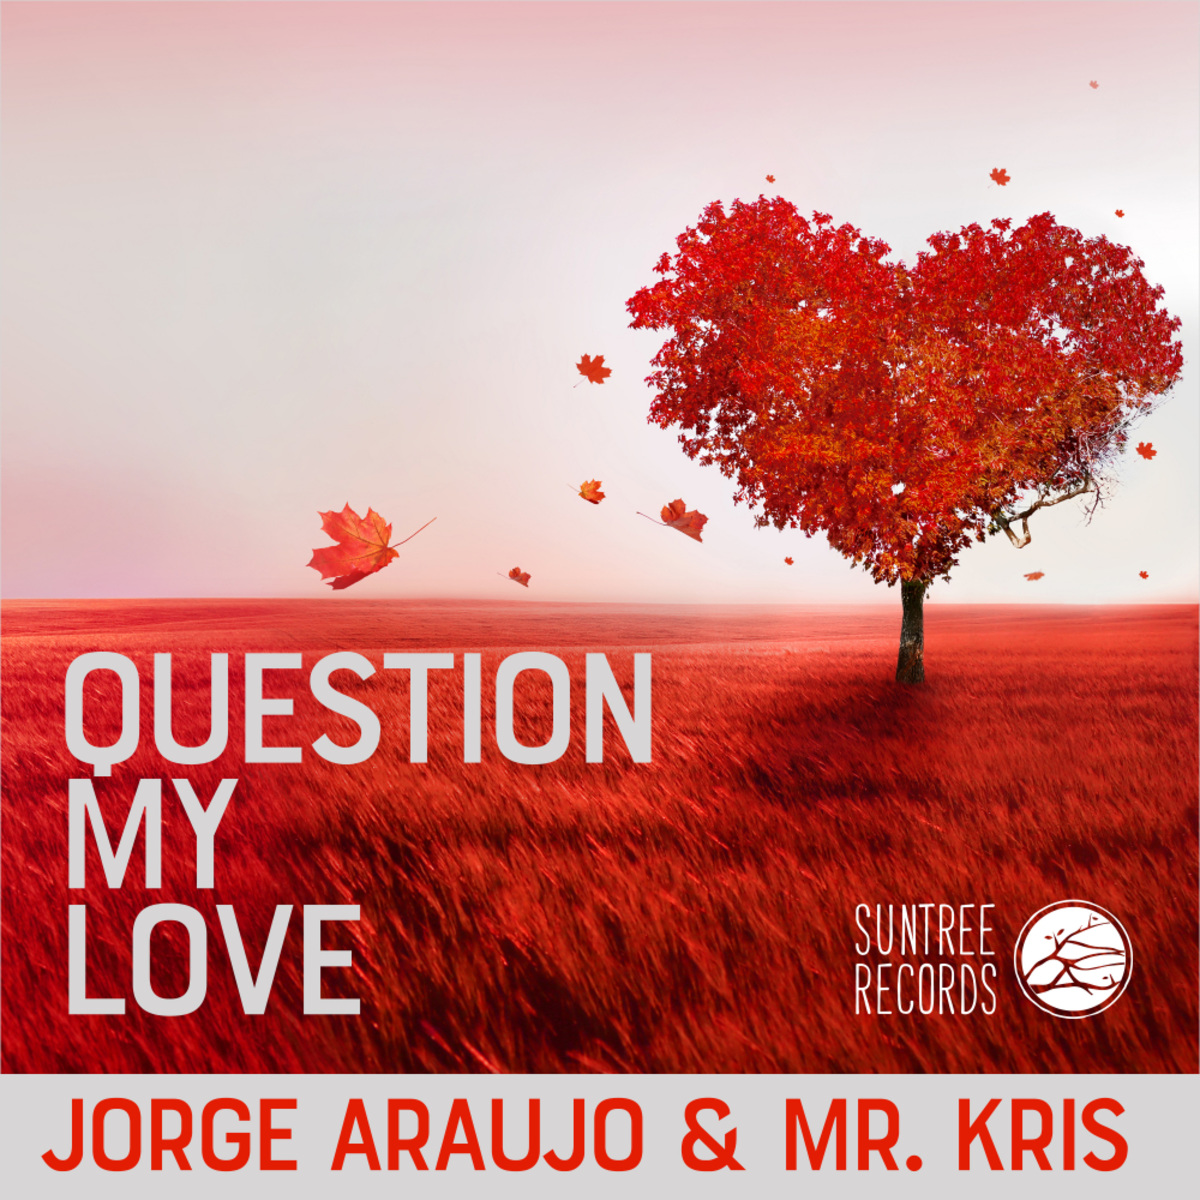 Jorge Araujo & Mr. Kris - Question My Love / Suntree Records